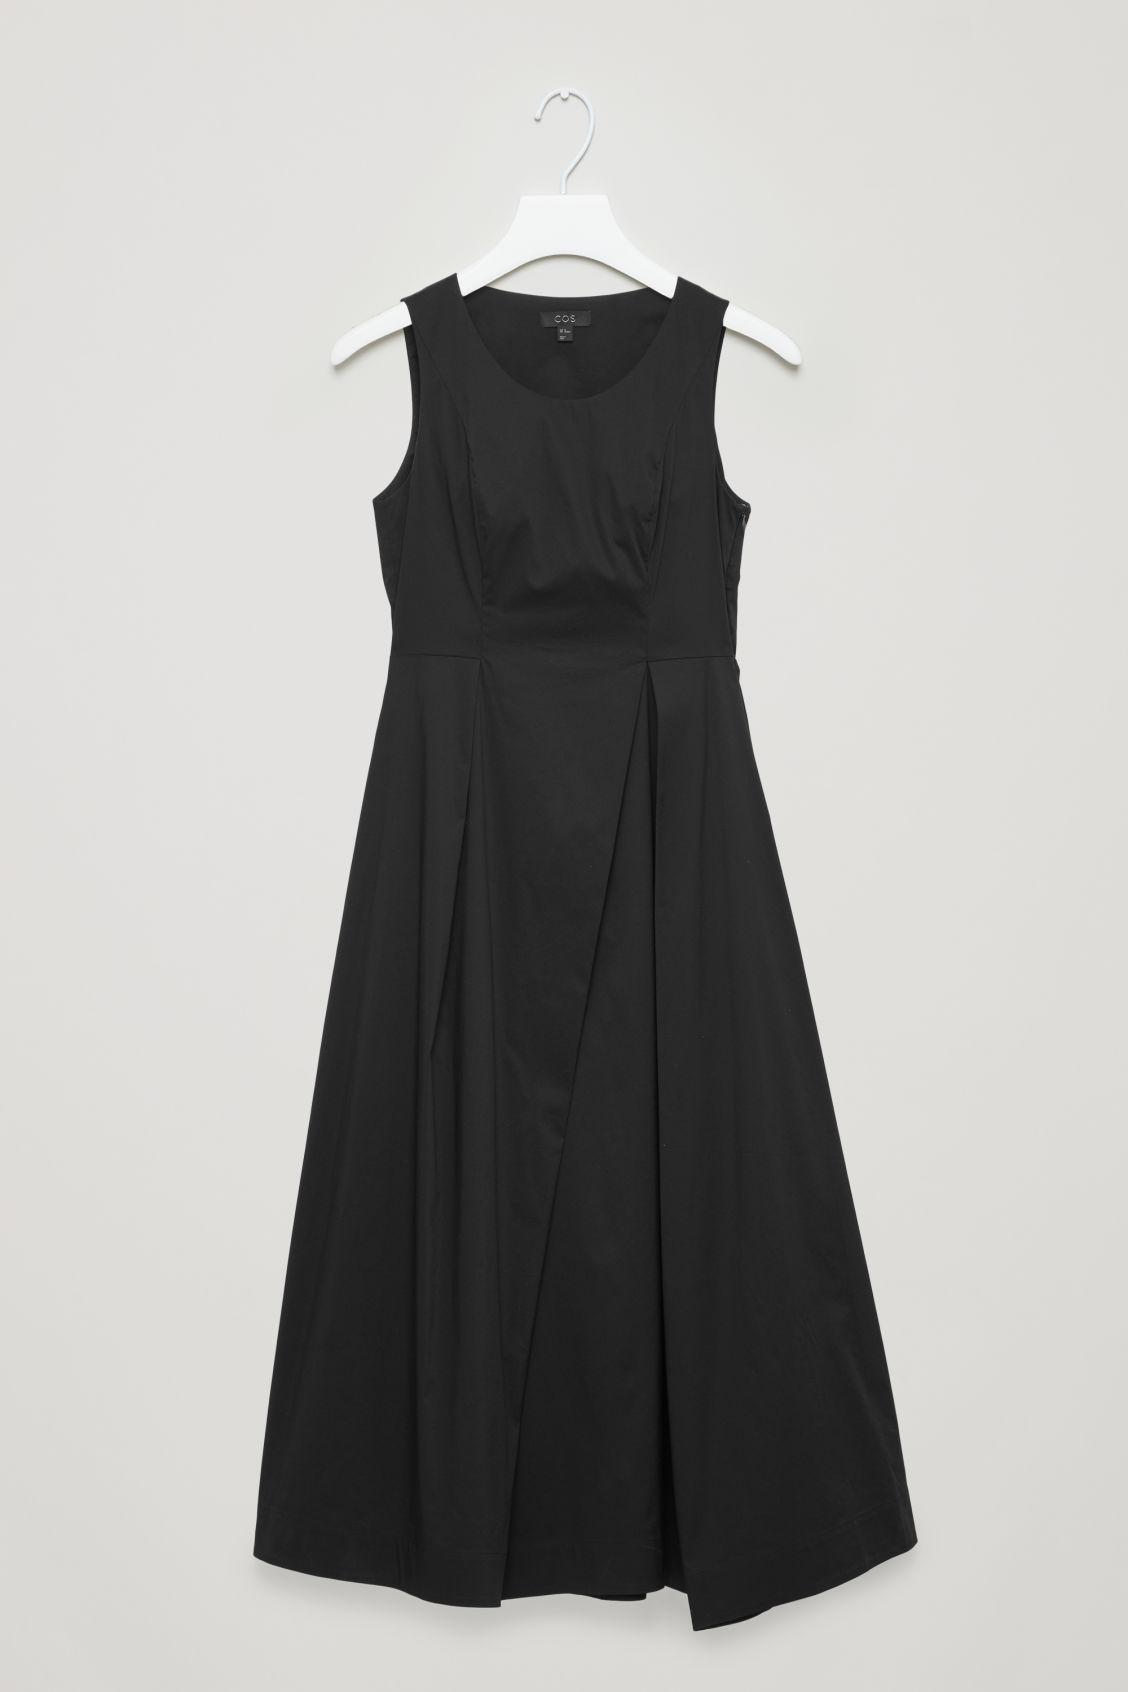 COS Flared Sleeveless Dress in Black | Lyst